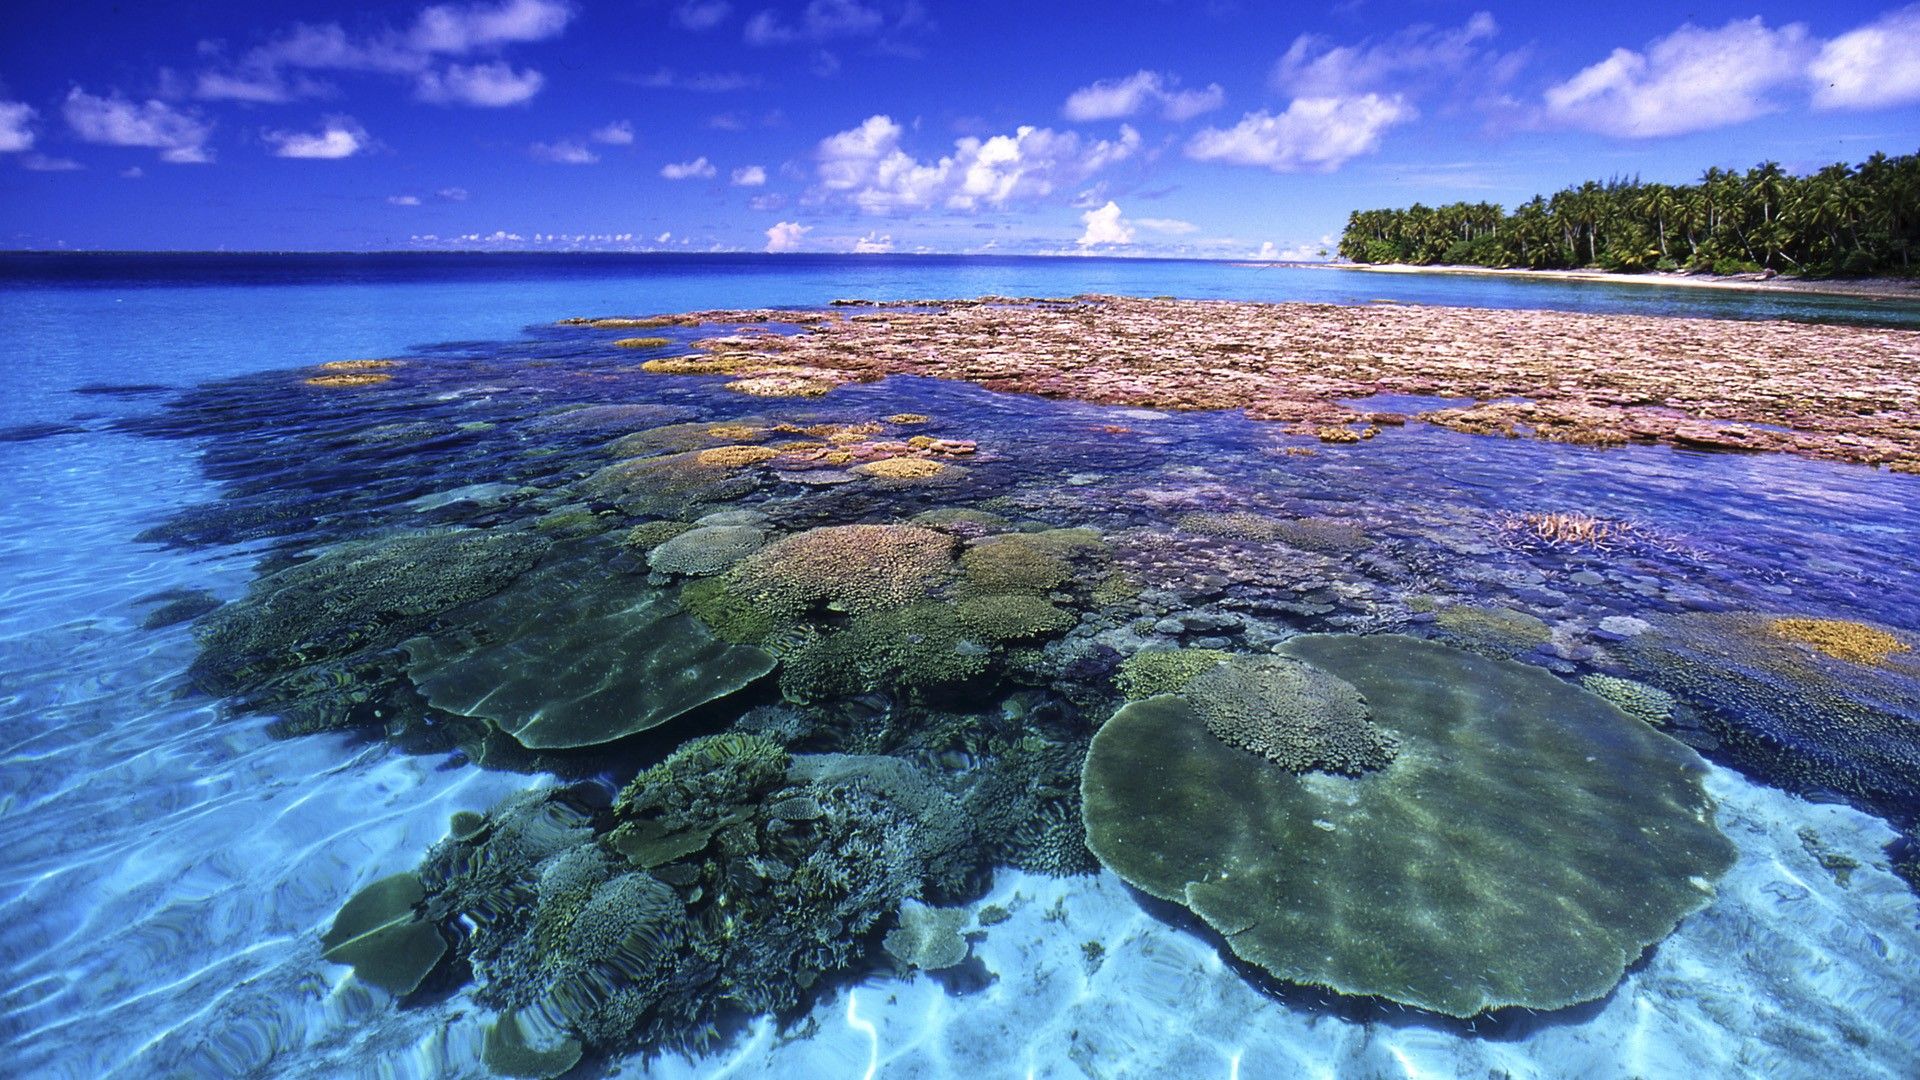 Coral Reef Wallpapers | Free HD Desktop Wallpapers - Widescreen Images